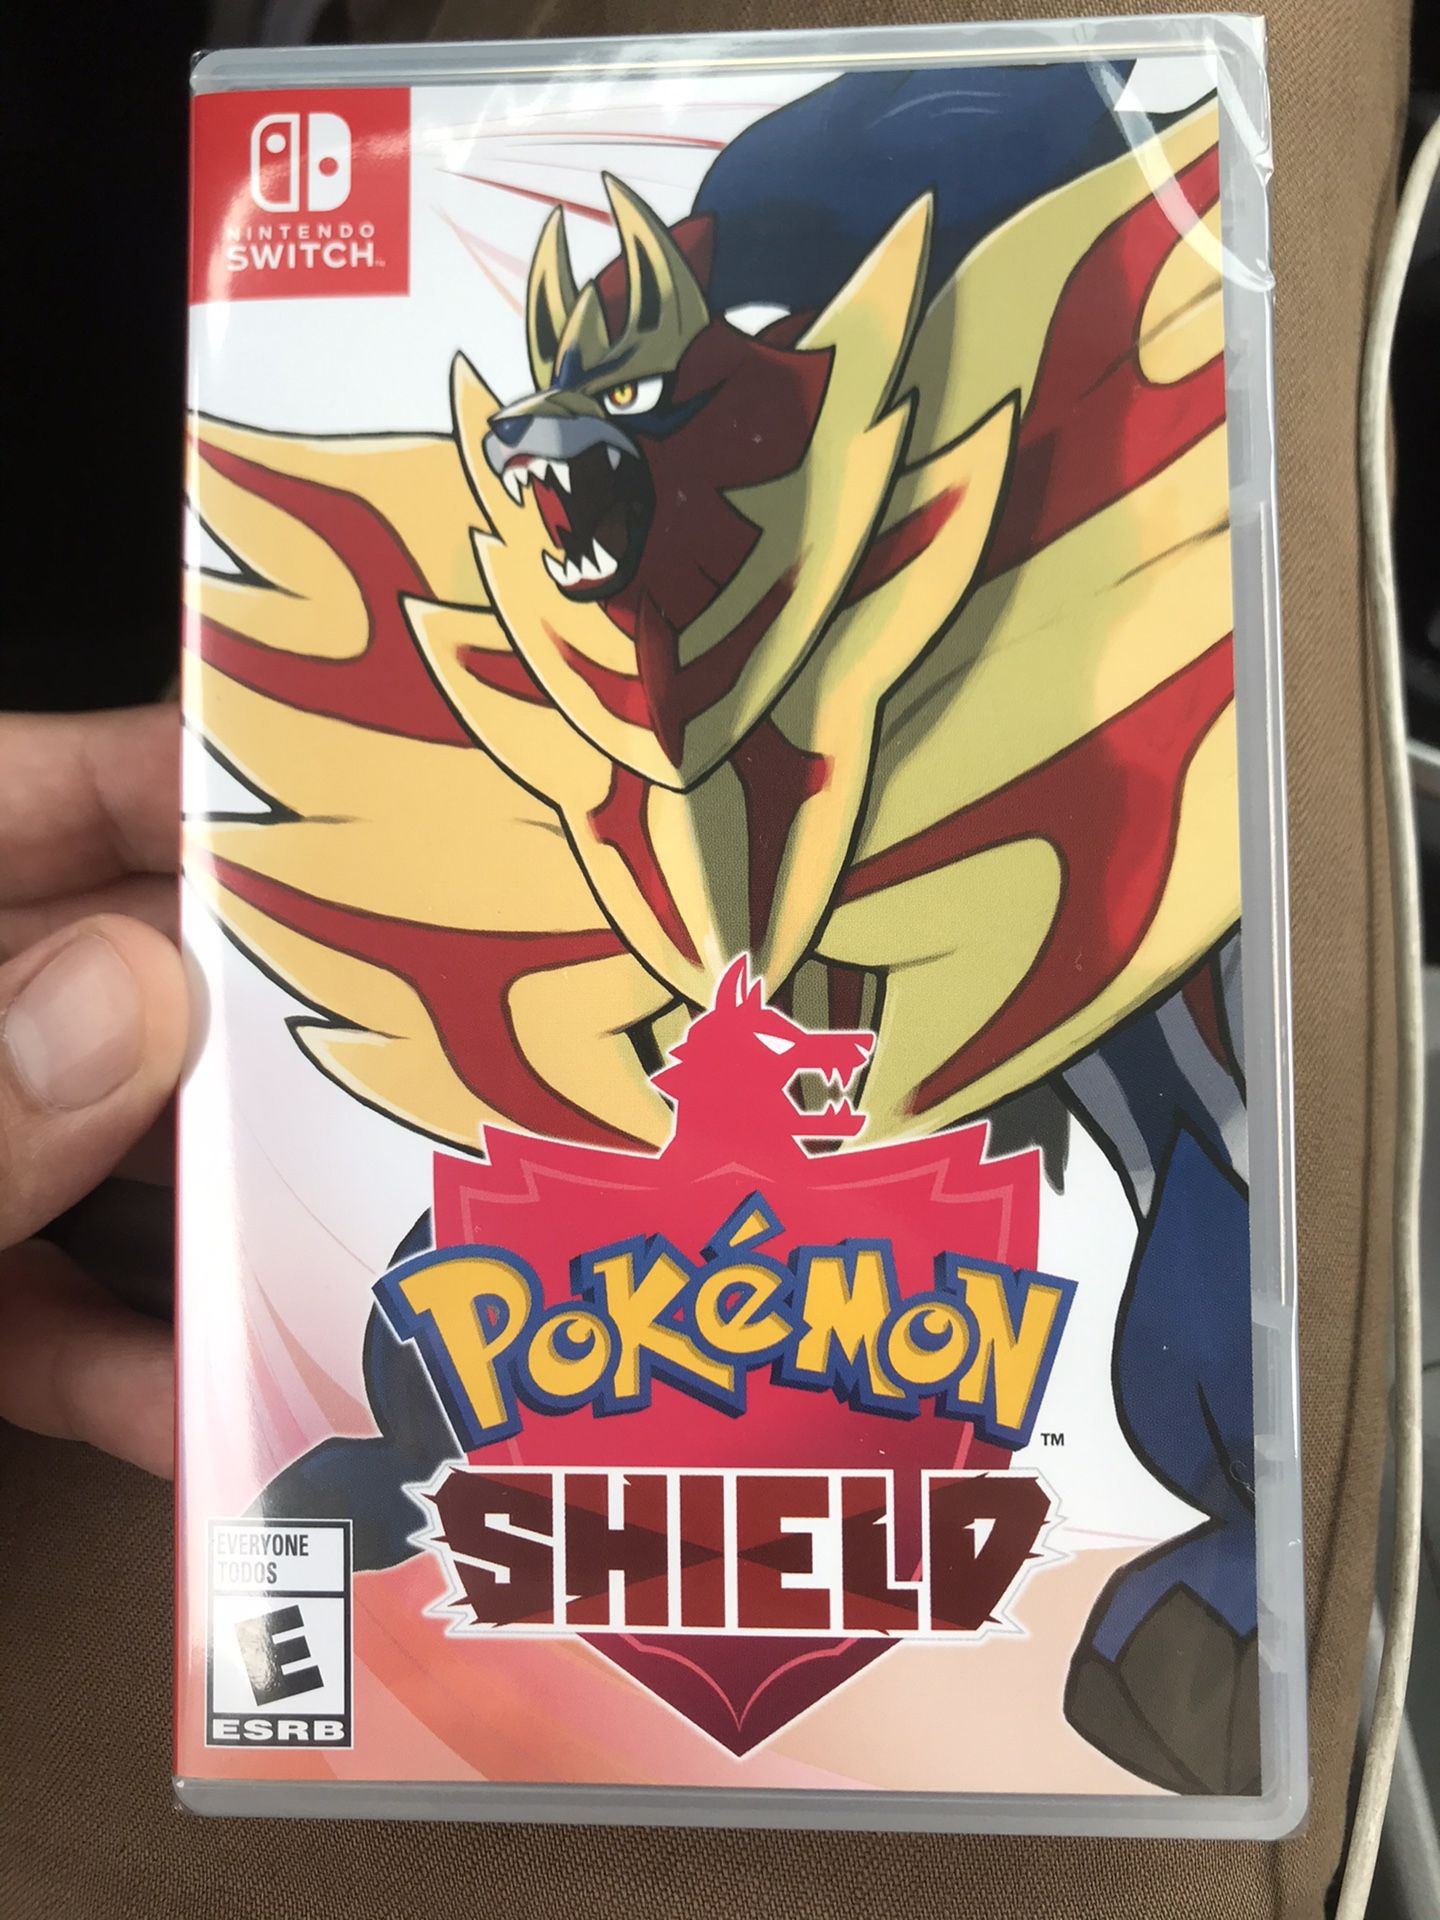 Sealed Brand New Pokemon Shield game for Nintendo Switch